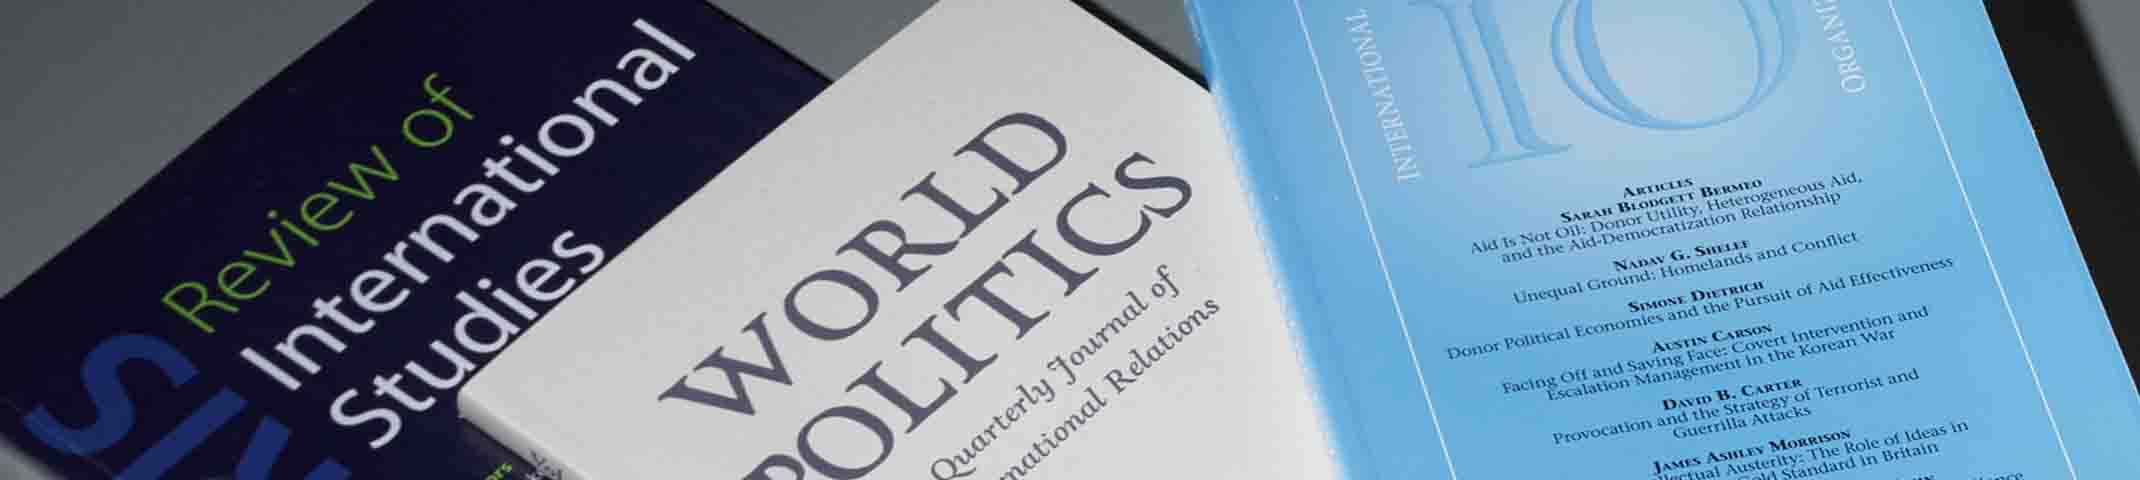 International Relations journals